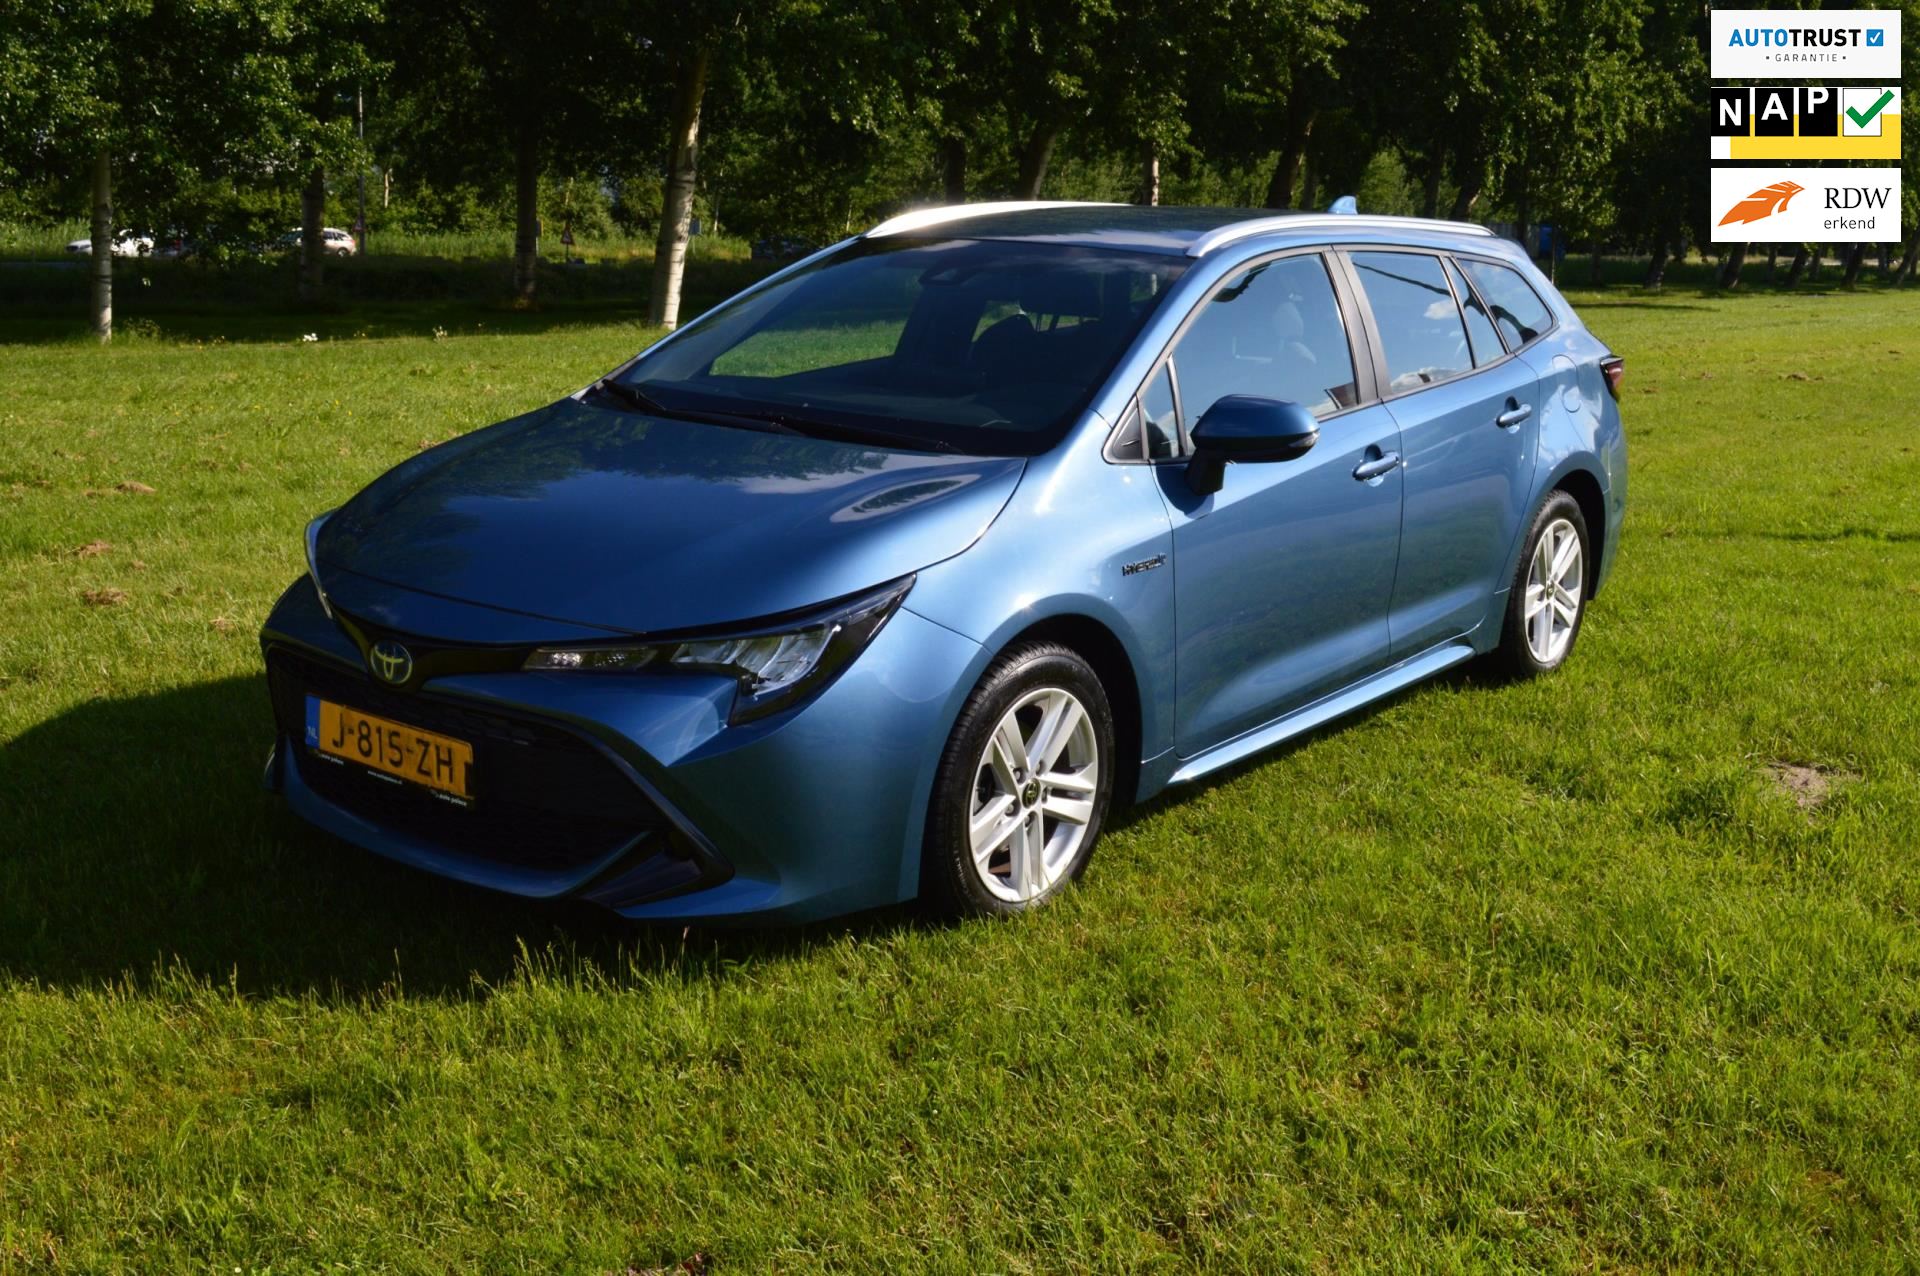 Toyota Corolla Touring Sports occasion - New Occasions Almere Buiten